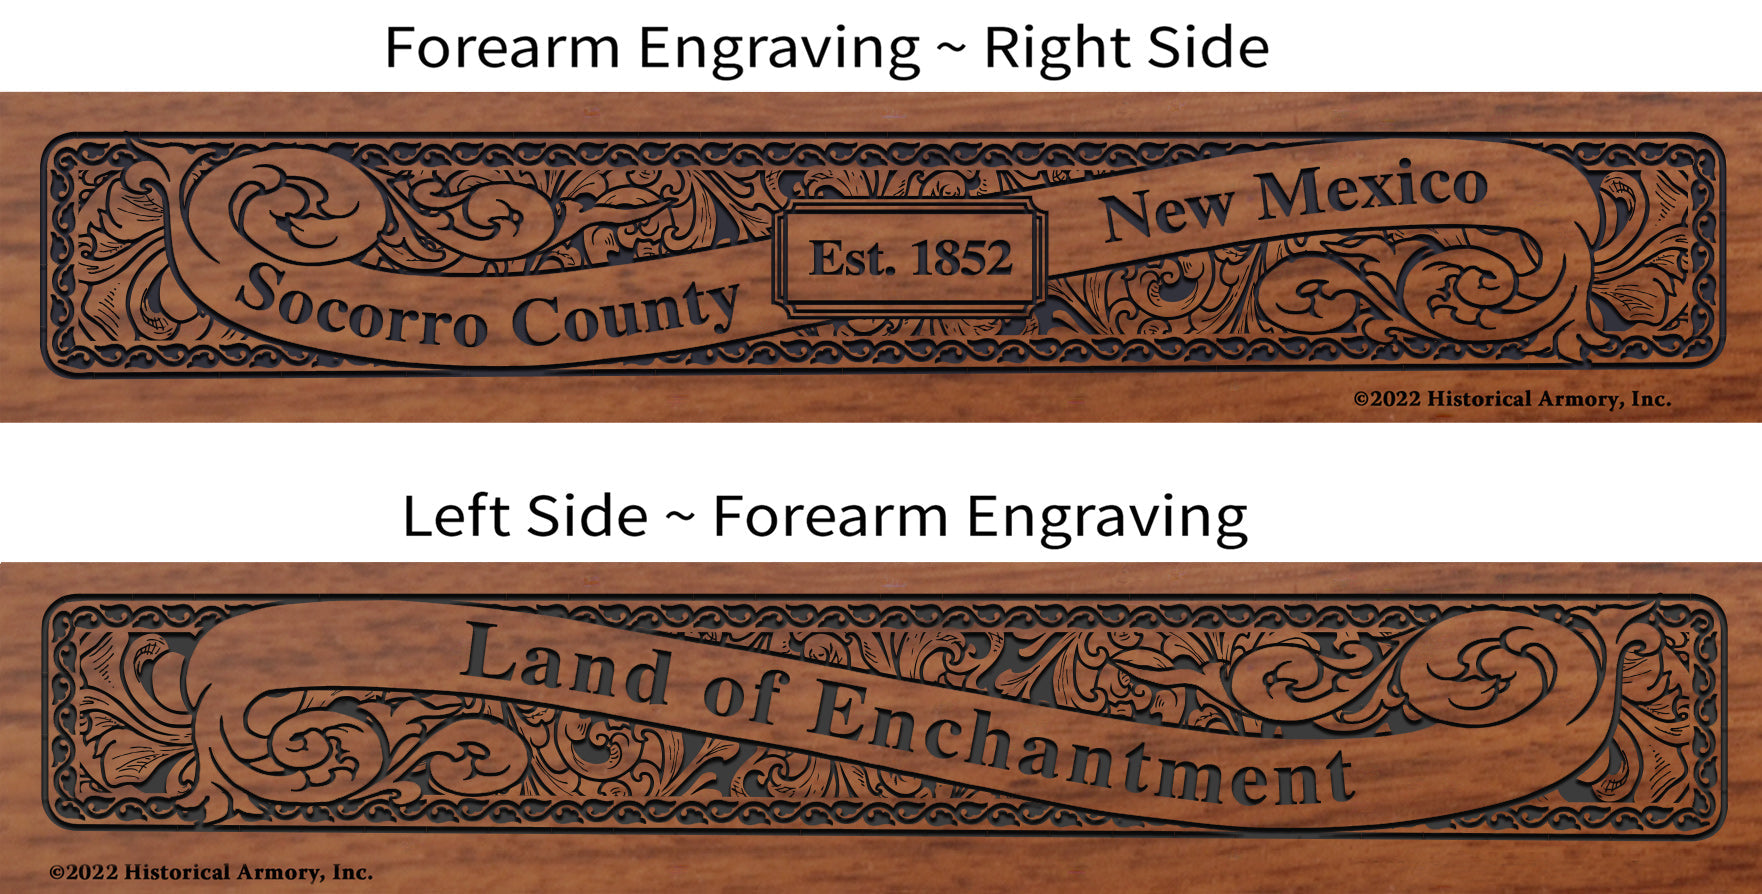 Socorro County New Mexico Engraved Rifle Forearm